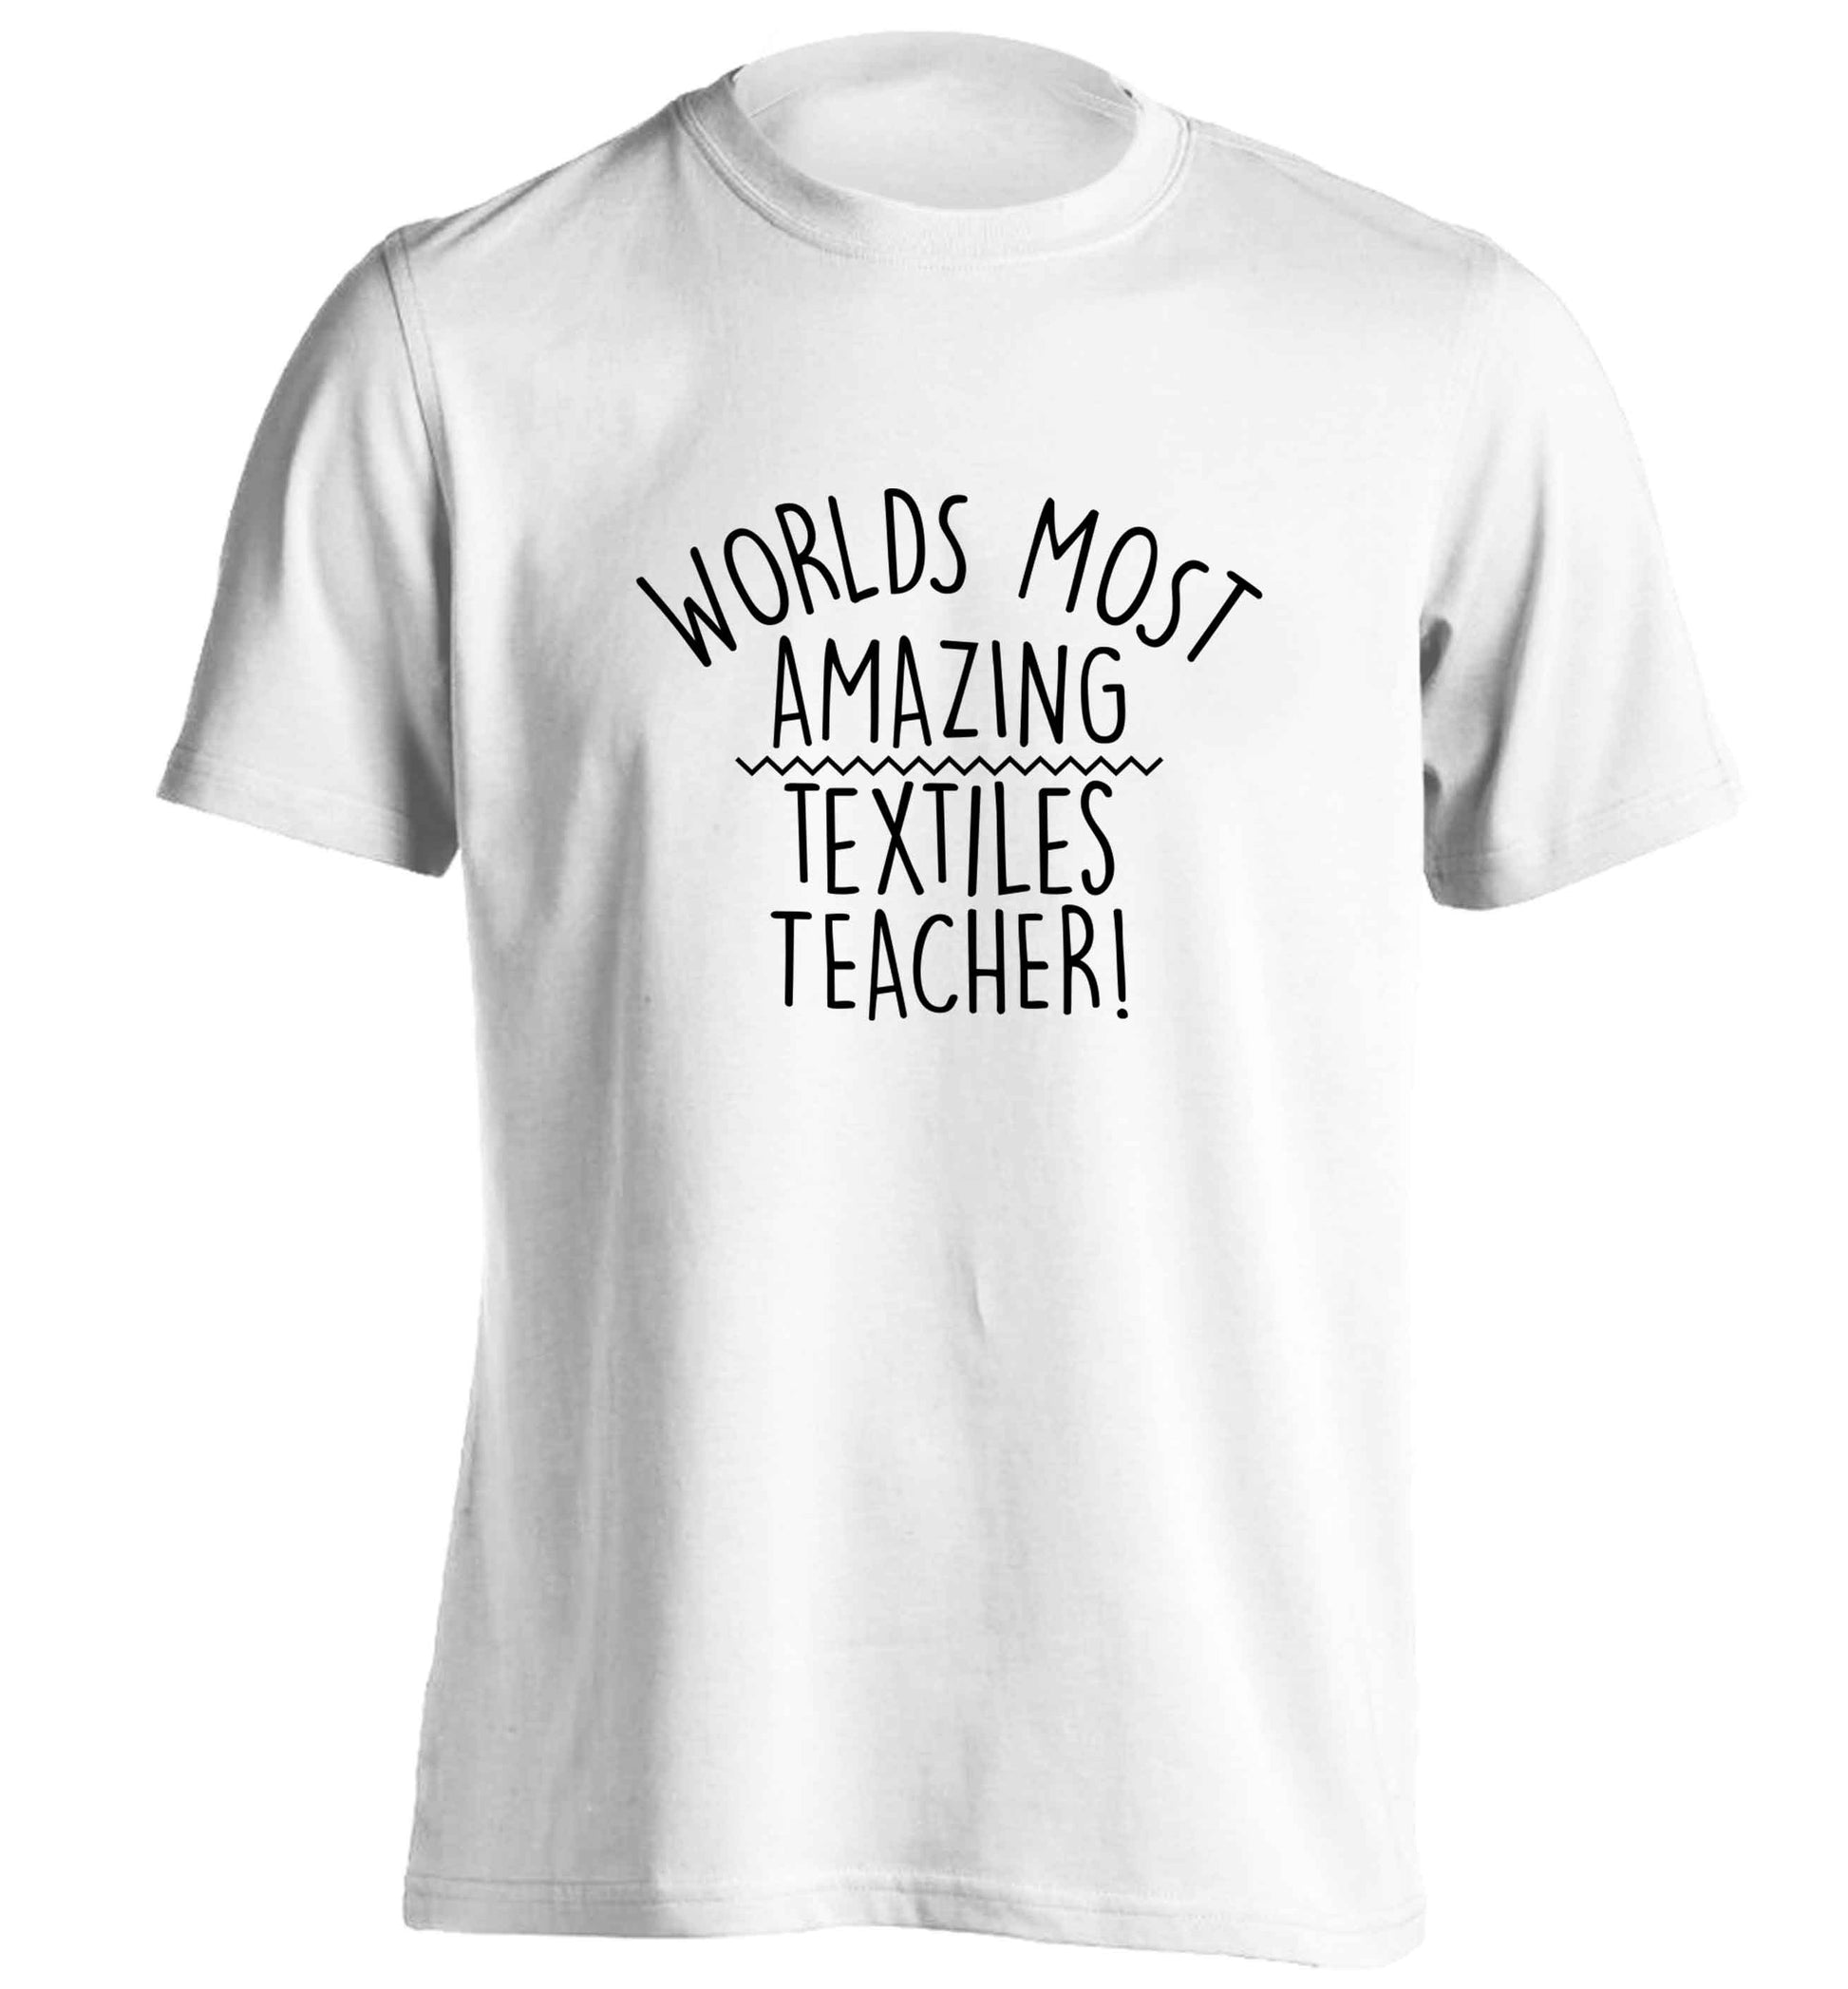 Worlds most amazing textiles teacher adults unisex white Tshirt 2XL